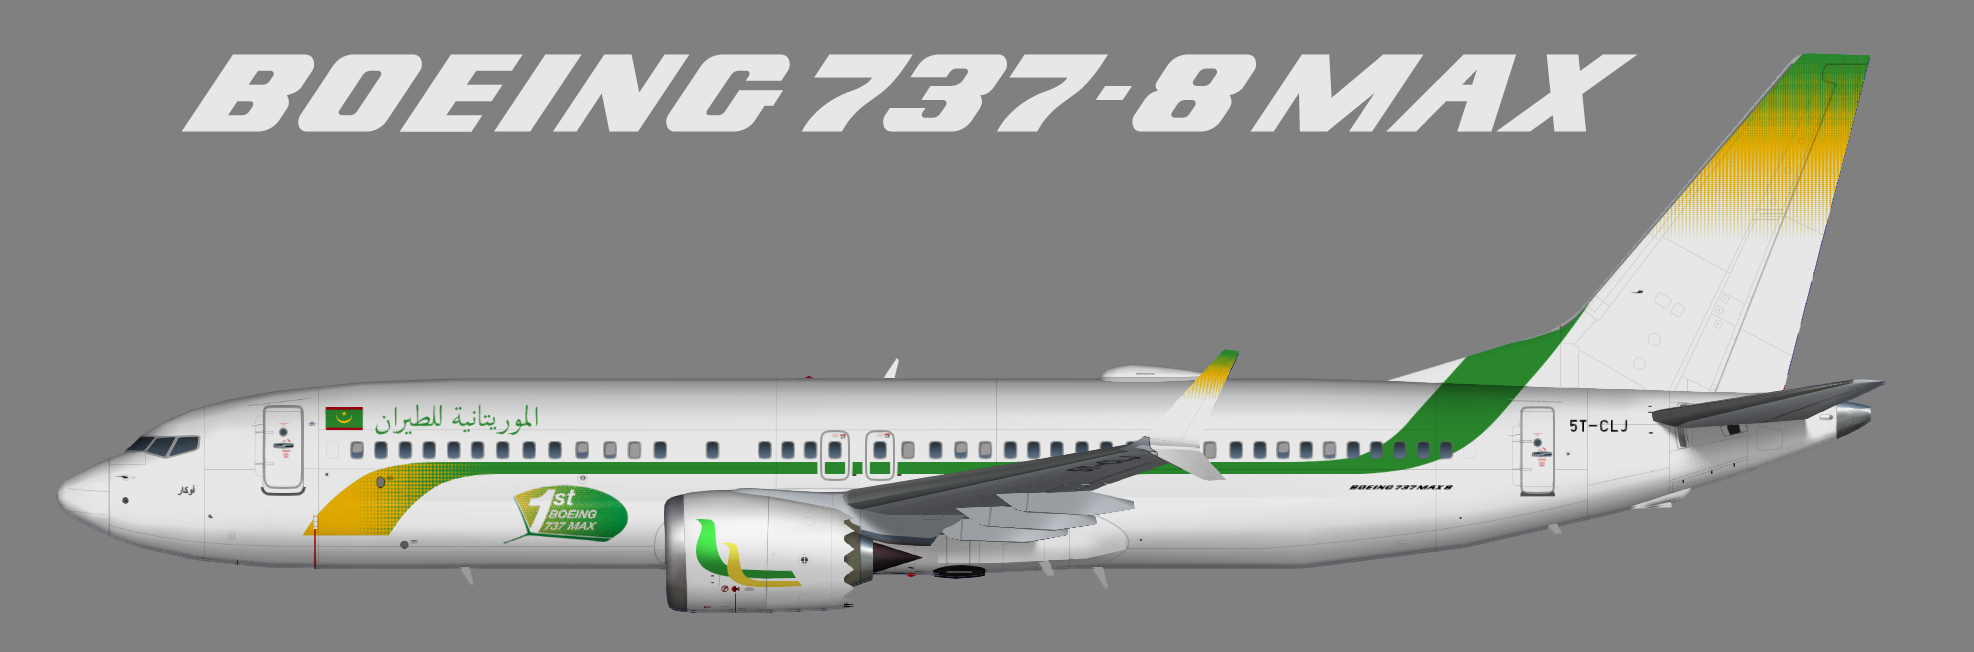 Mauritania Airlines Boeing 737 MAX 8